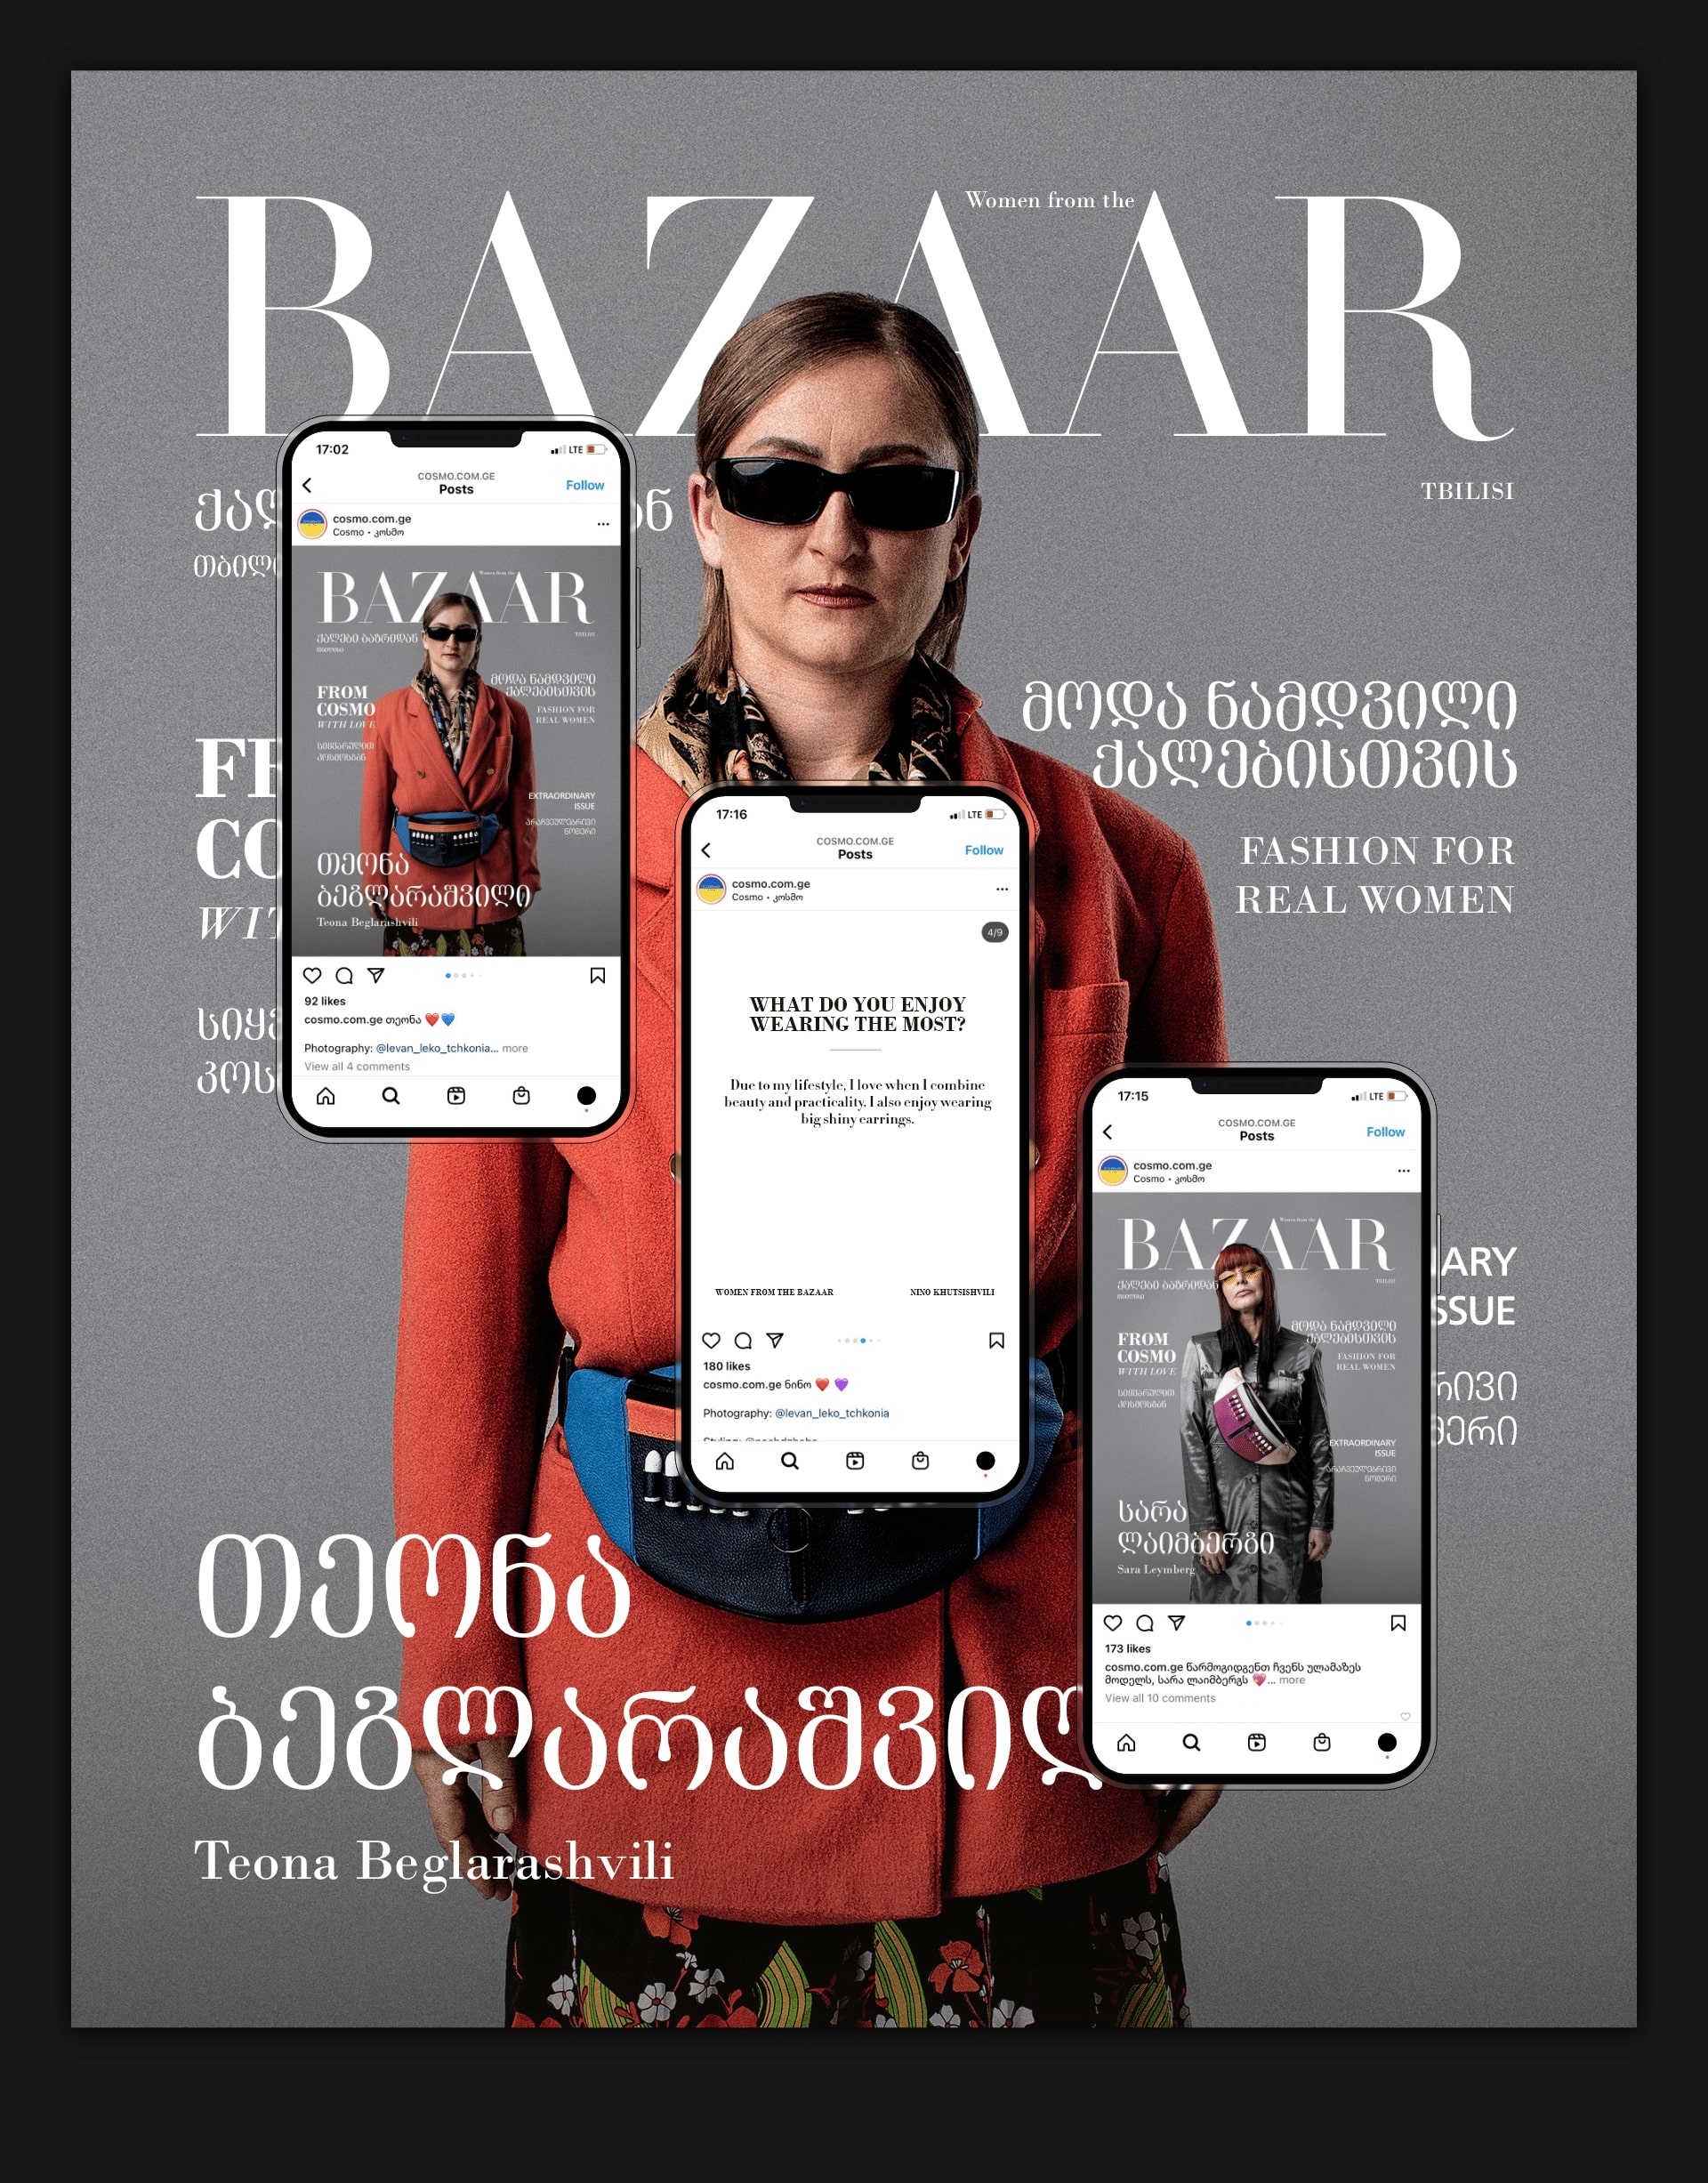 Women from the Bazaar - Fashion Magazine